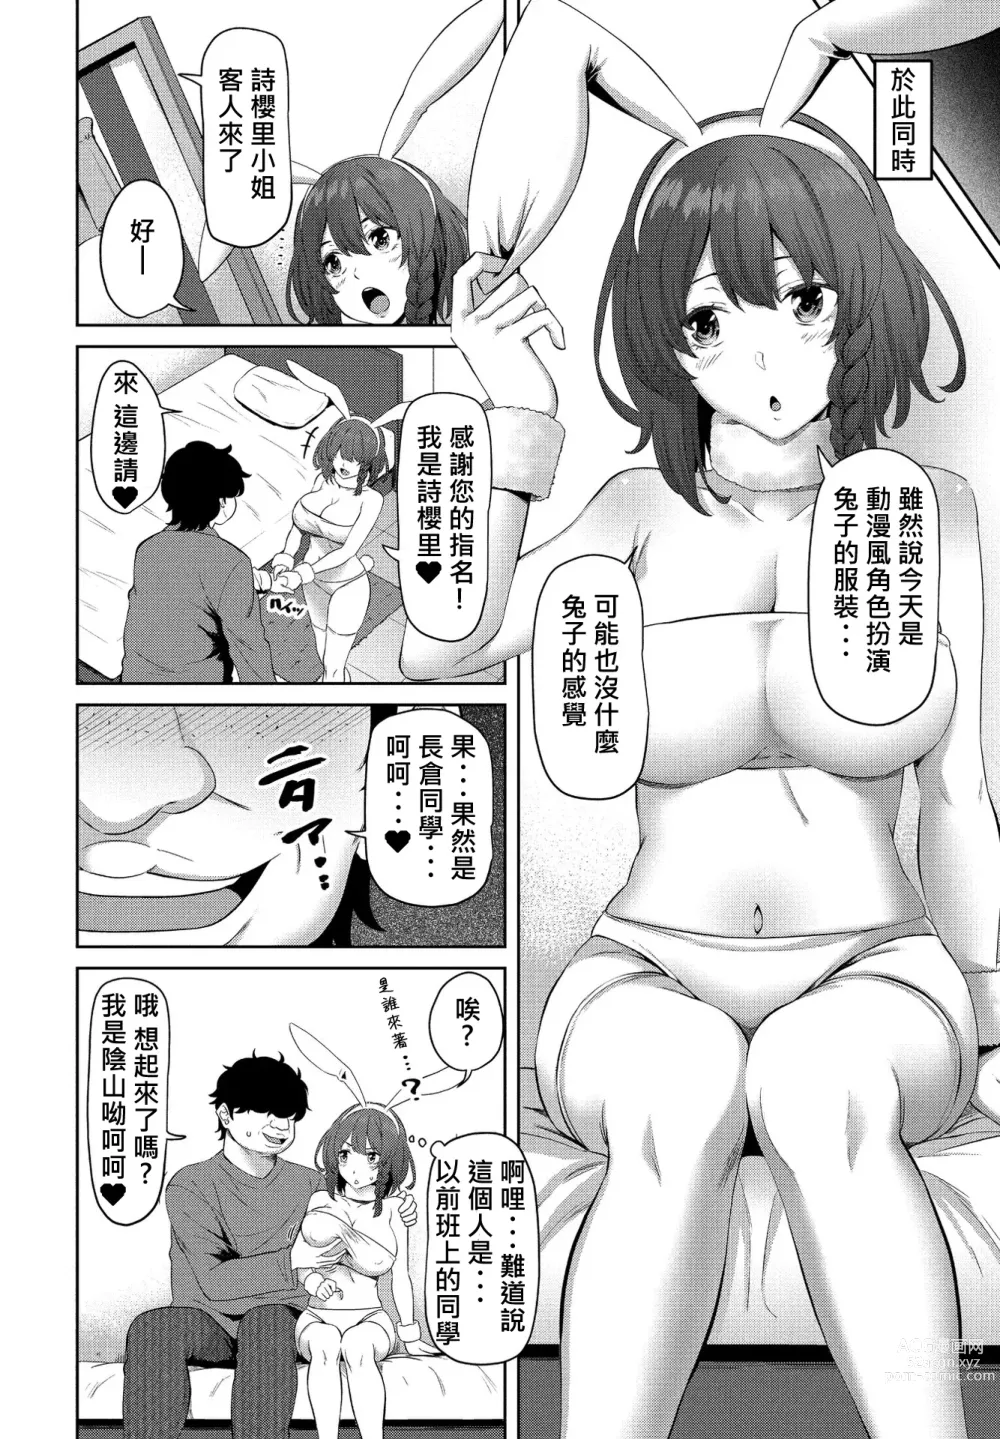 Page 3 of manga Chotto Kiite yo! Ch. 3